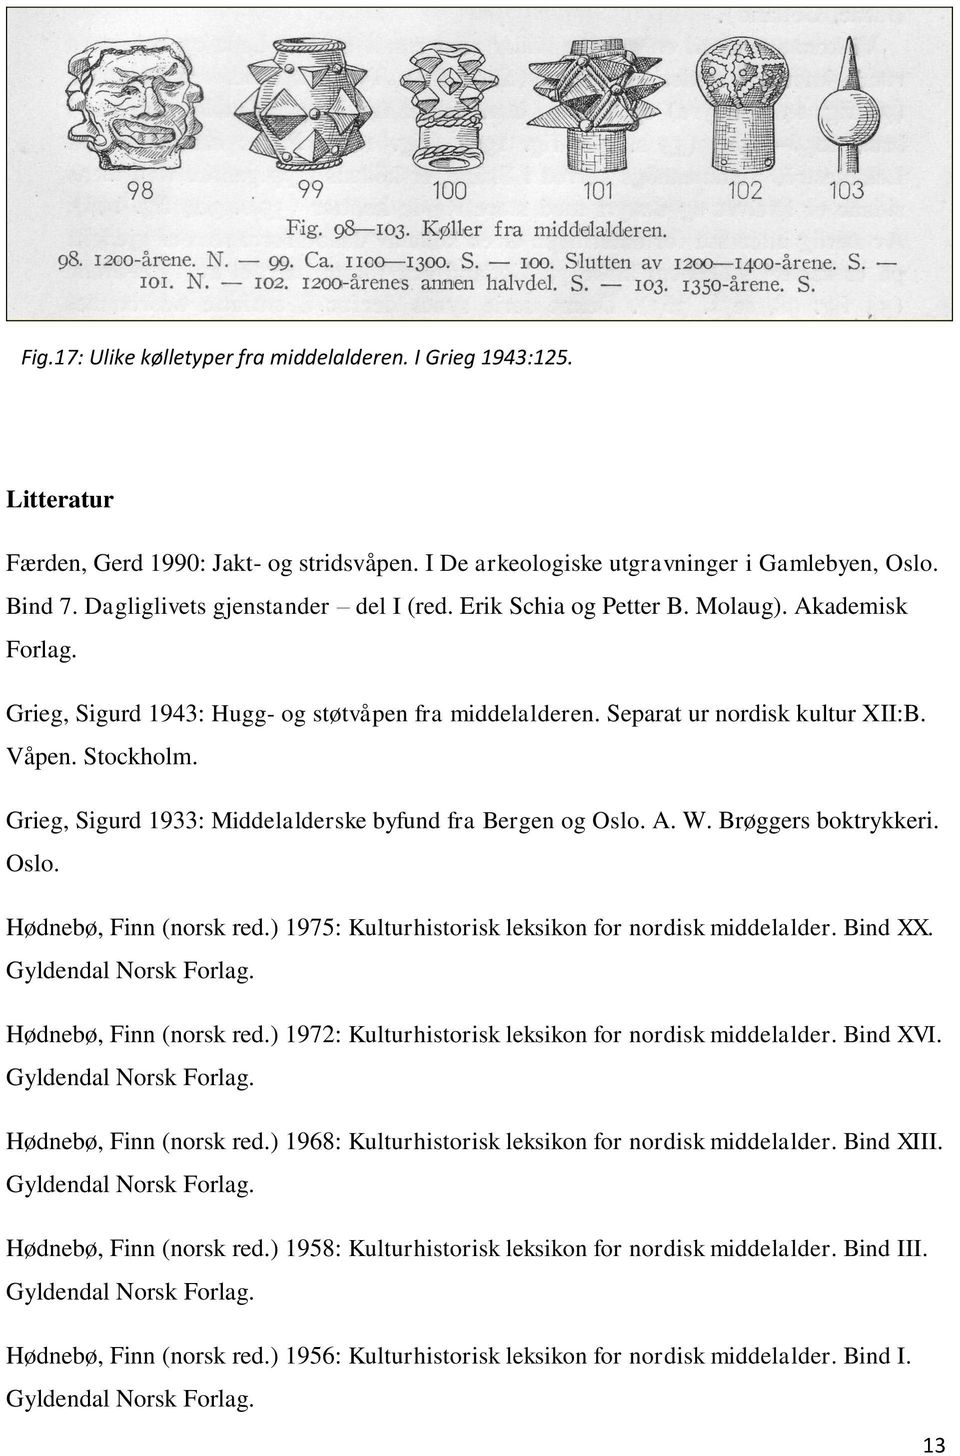 Grieg, Sigurd 1933: Middelalderske byfund fra Bergen og Oslo. A. W. Brøggers boktrykkeri. Oslo. Hødnebø, Finn (norsk red.) 1975: Kulturhistorisk leksikon for nordisk middelalder. Bind XX.